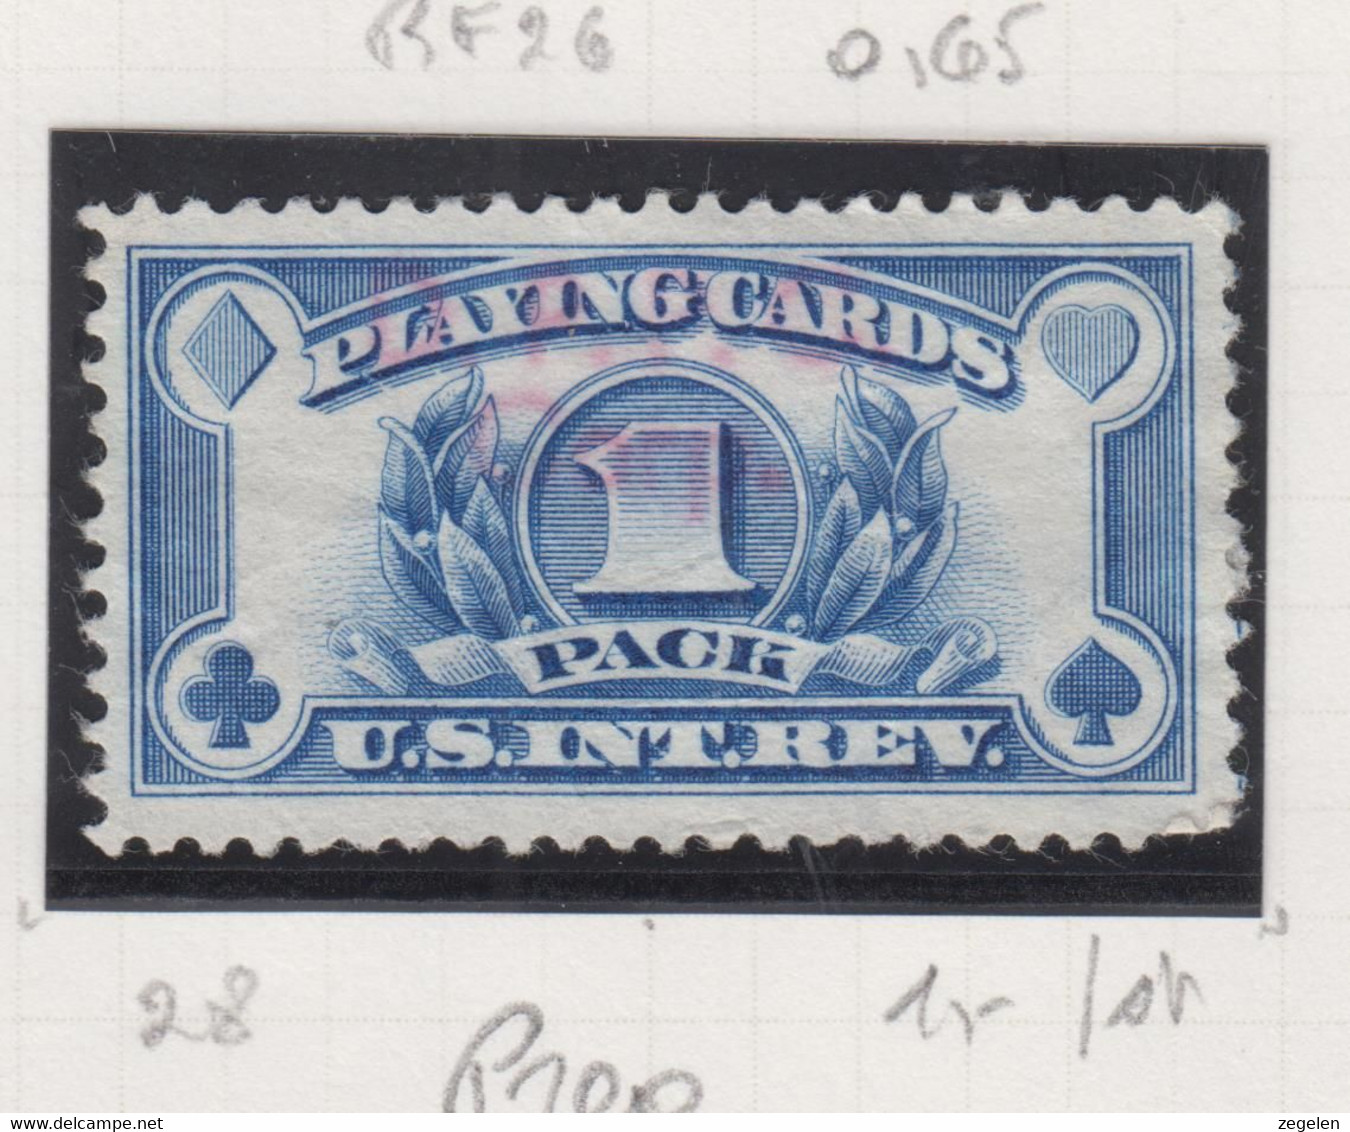 Verenigde Staten Scott Cataloog Revenue Stamps Playing Cards RE28 Met Preo-stempel - Revenues